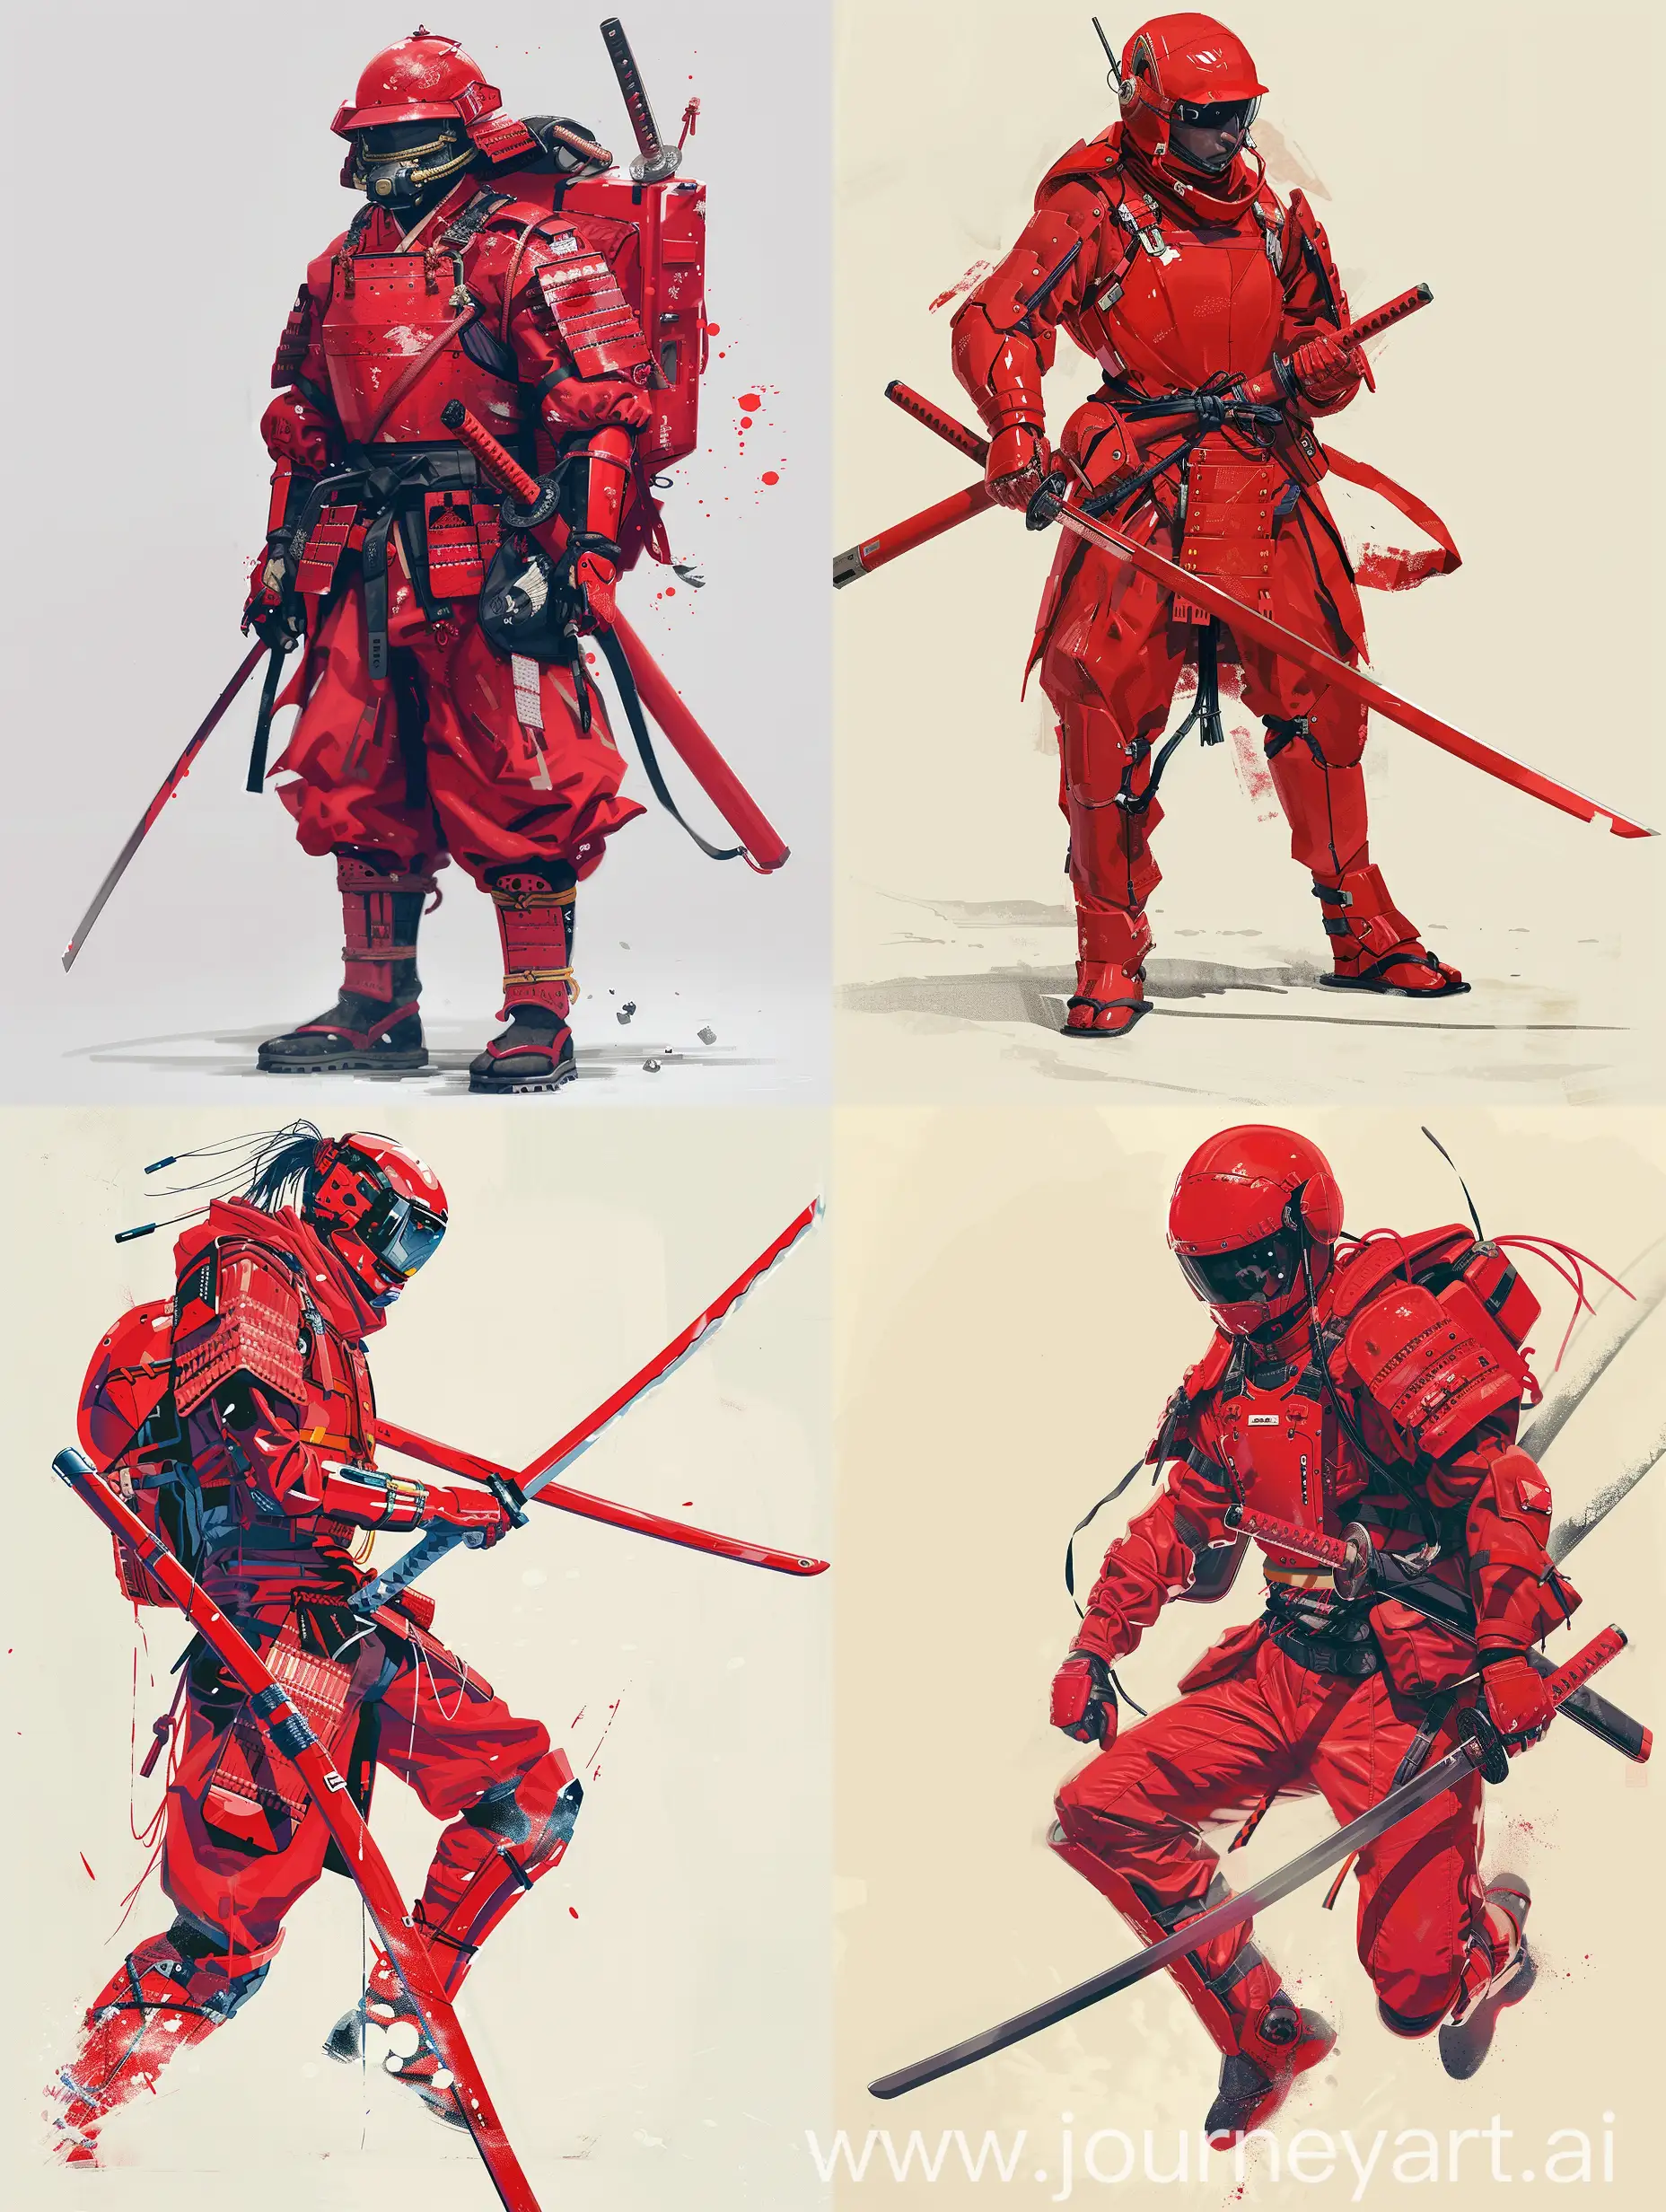 Futuristic-Urban-Samurai-in-Vibrant-Red-Armor